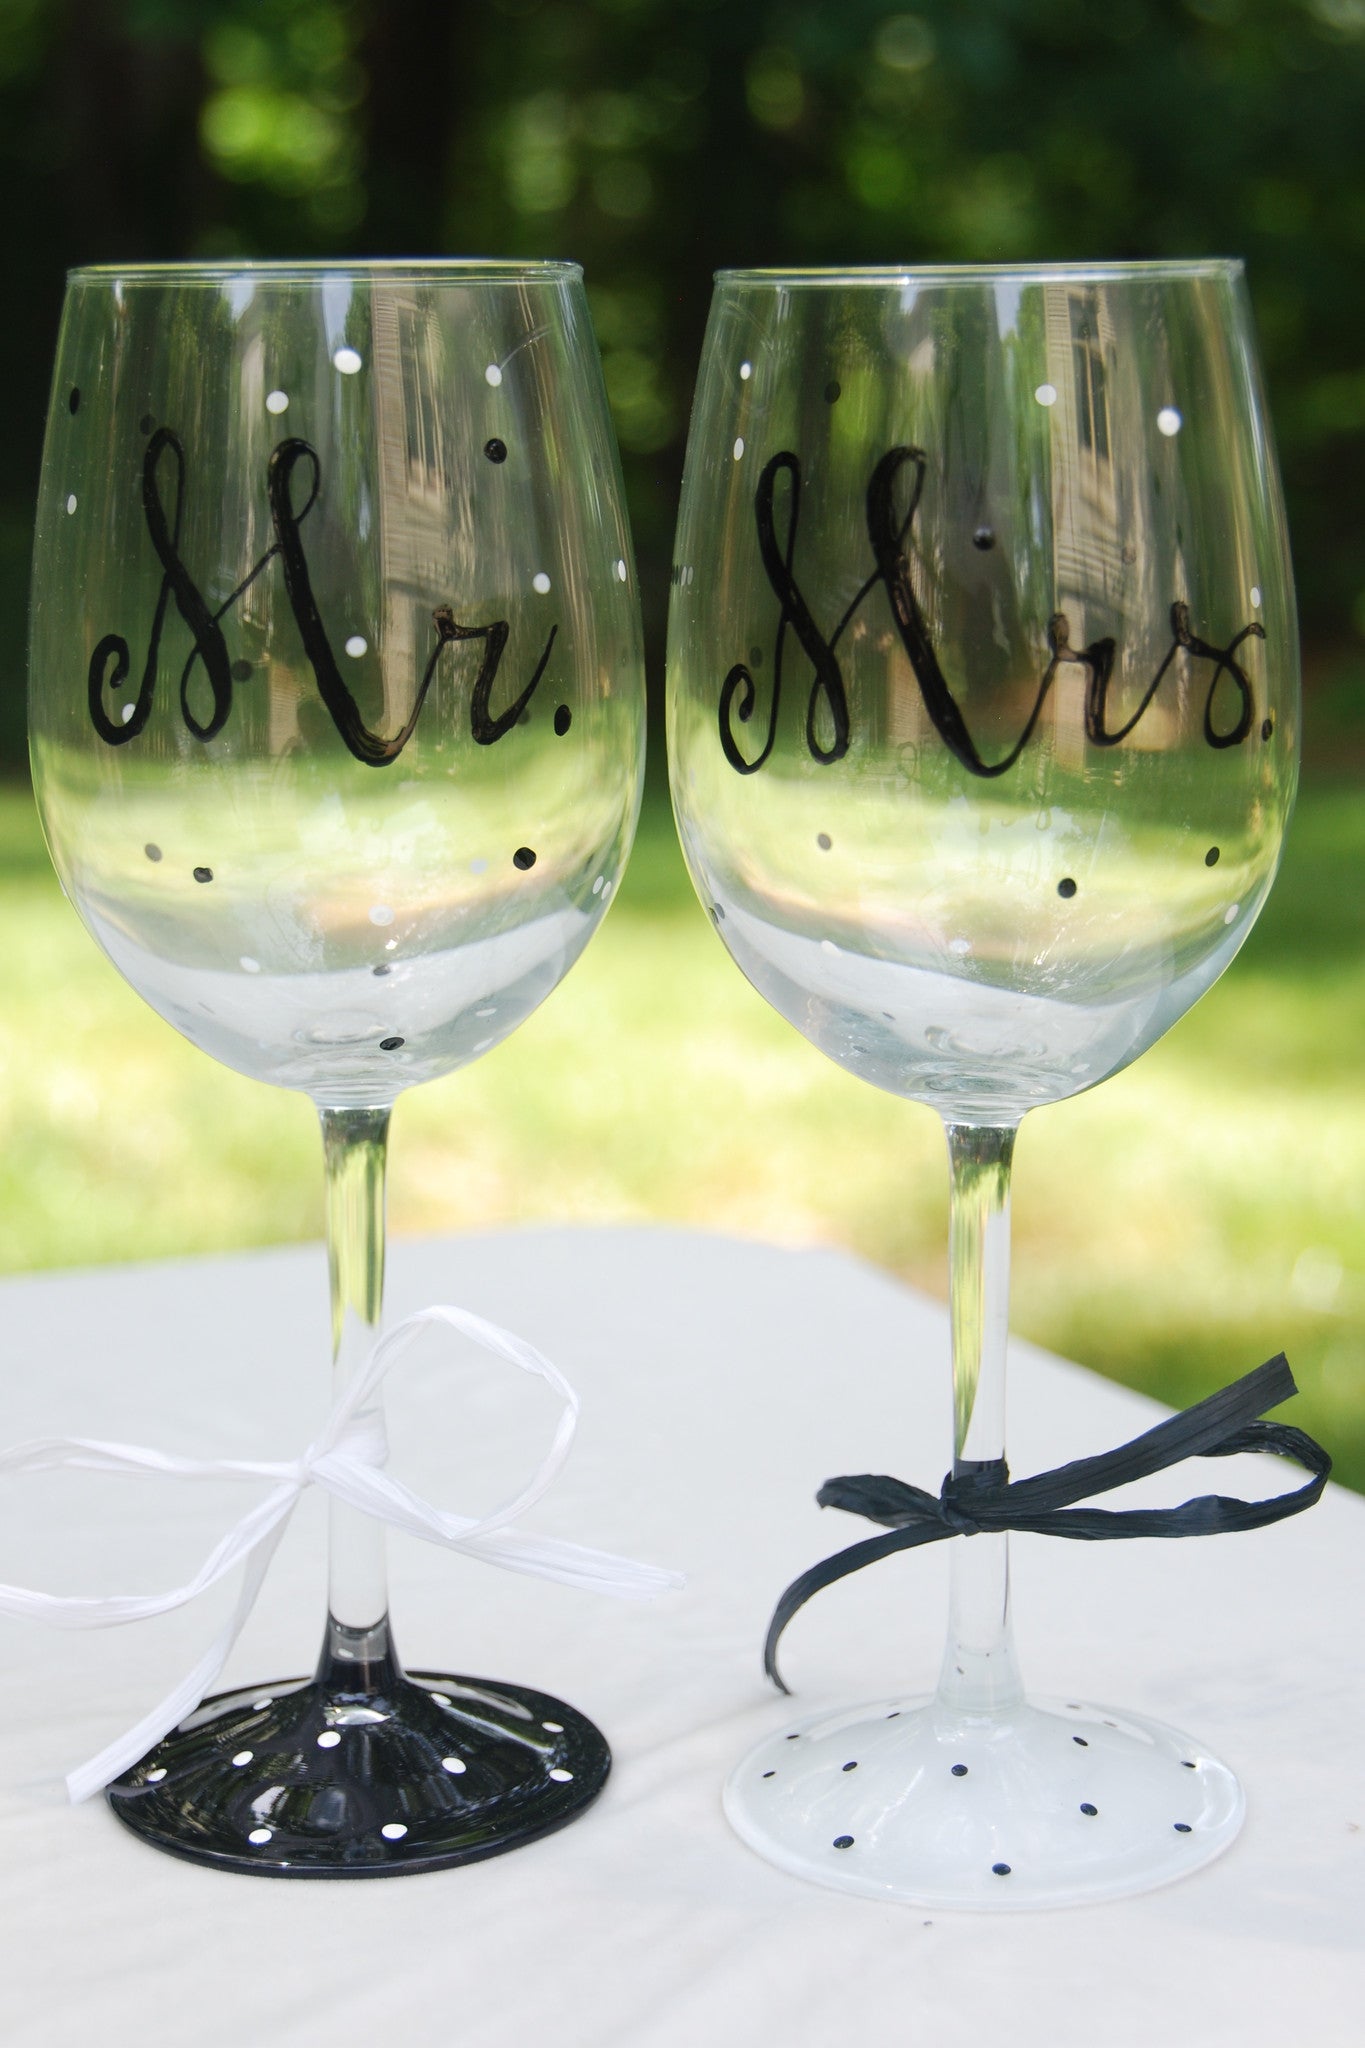 Mr. & Mrs. Hand Painted Wine Glasses